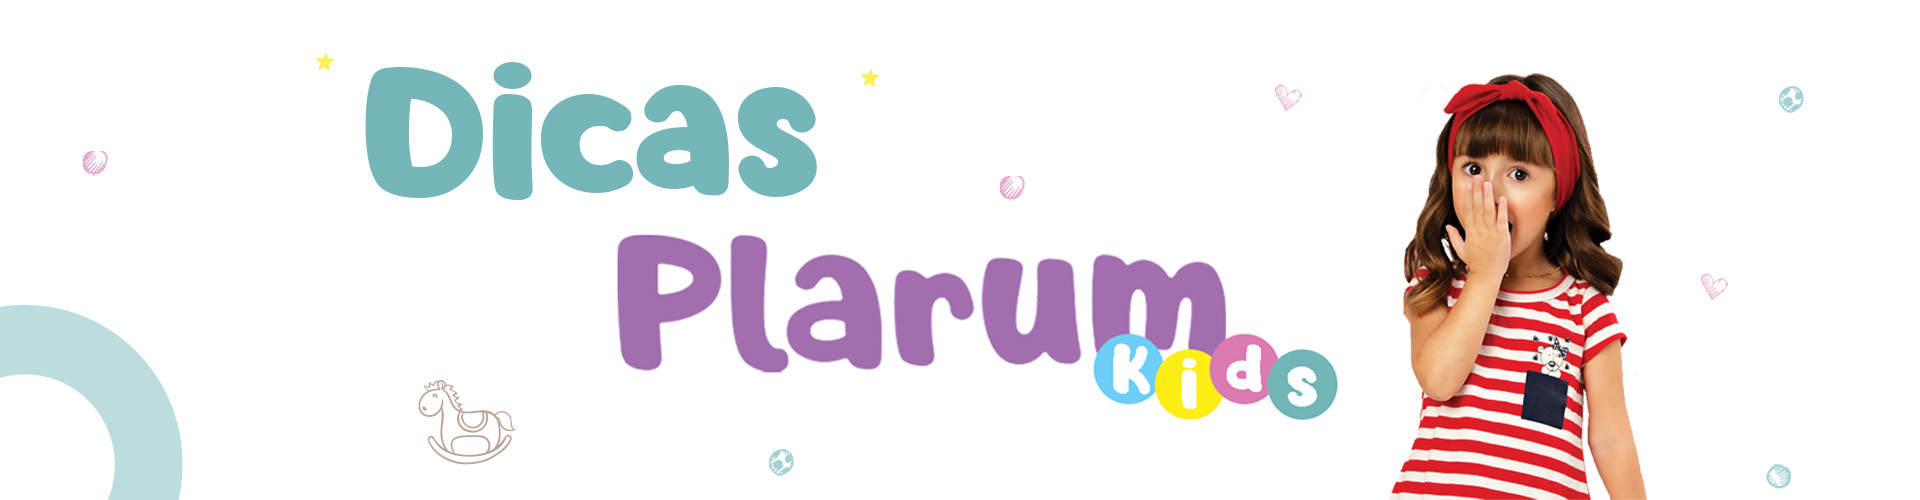 Blog Plarum Kids